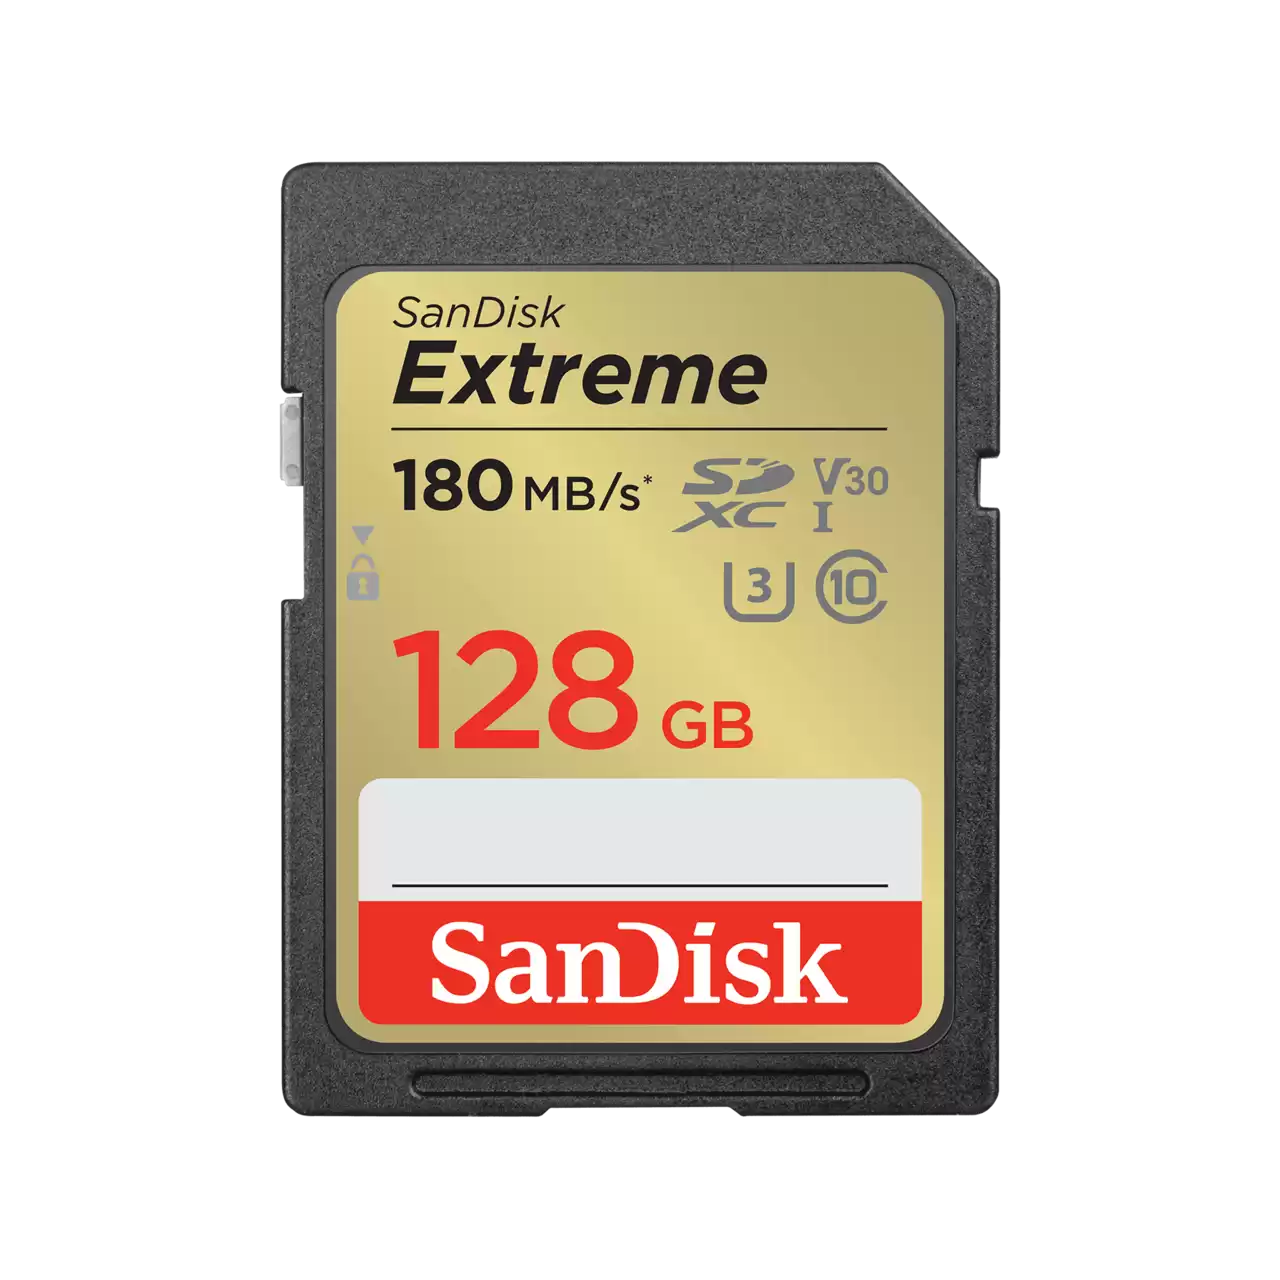 SanDisk Extreme SDXC Memory Card